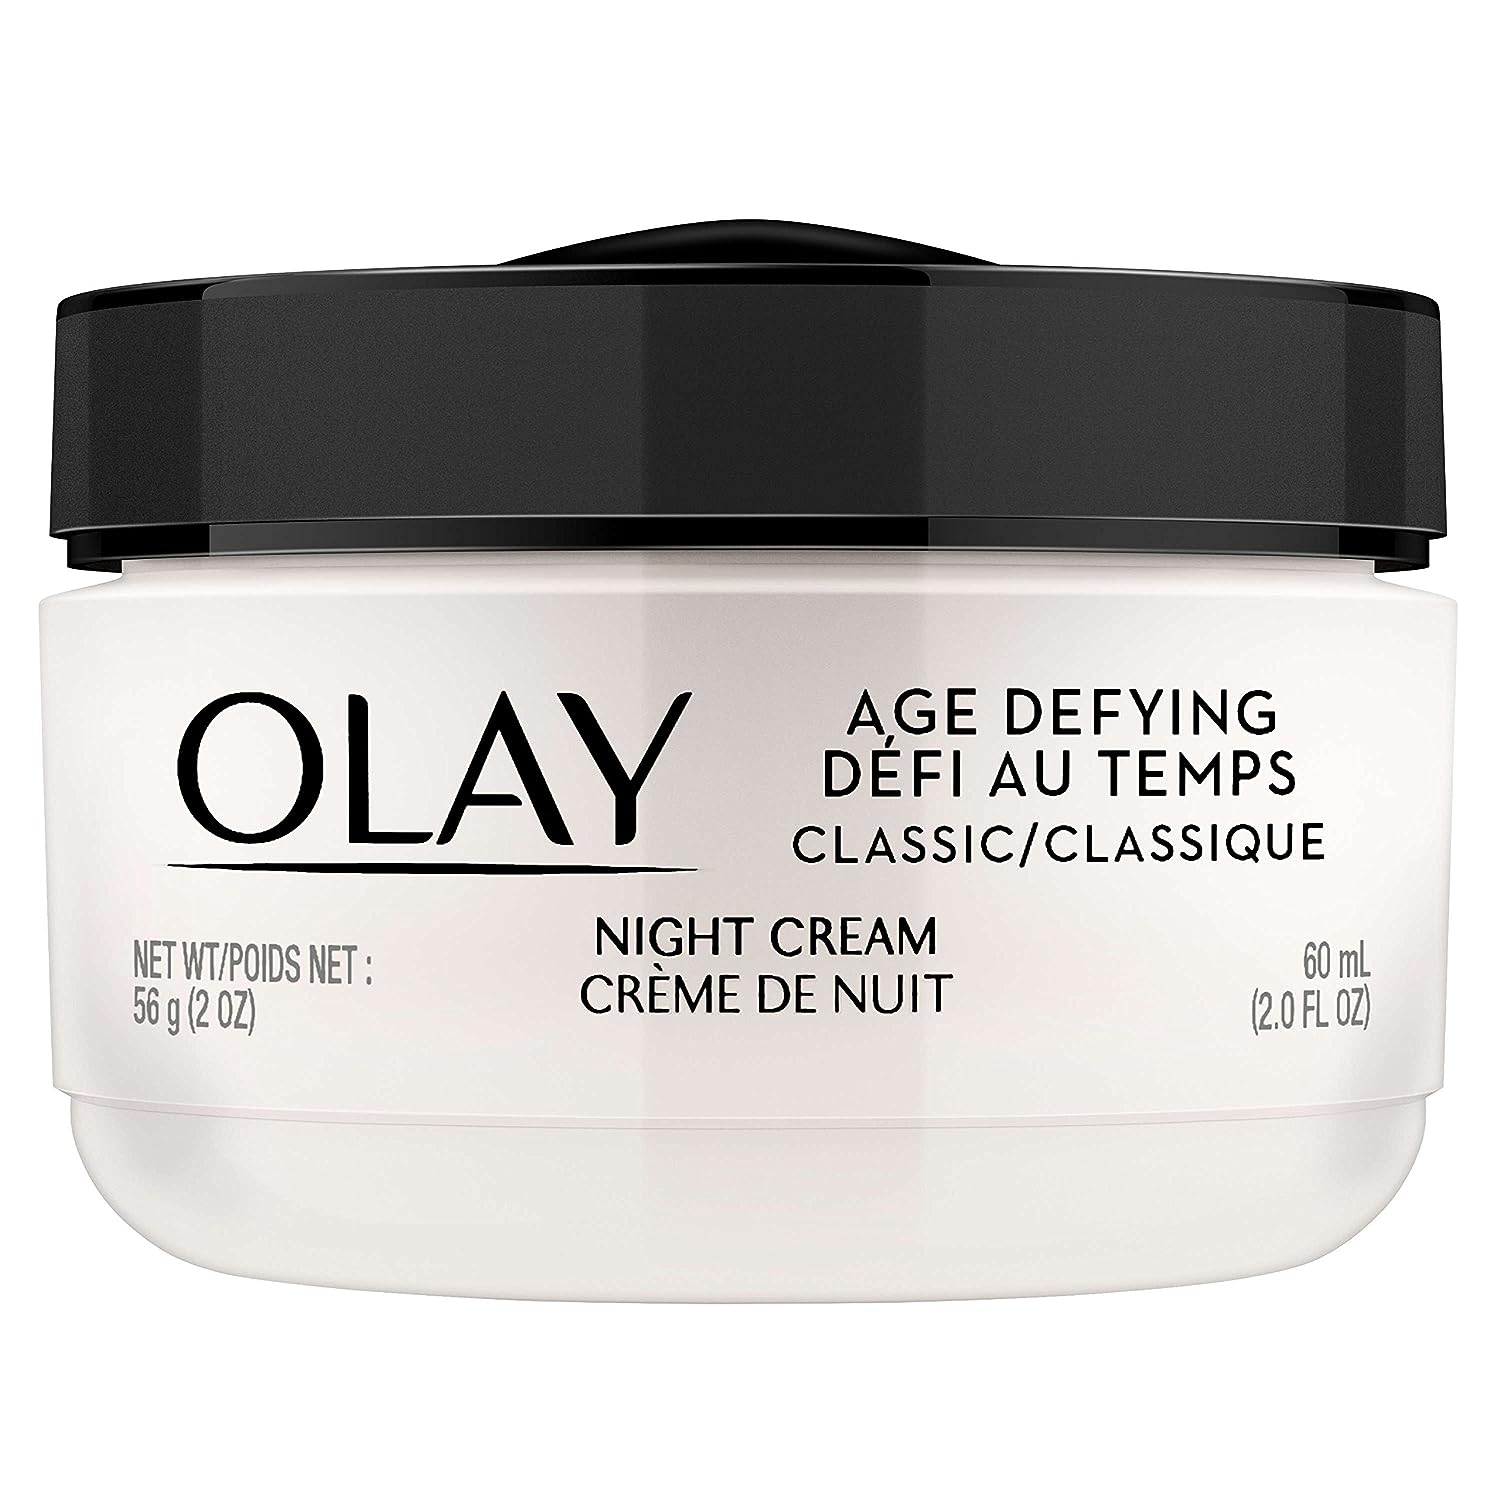 OLAY Age Defying Classic Night Cream 2.0